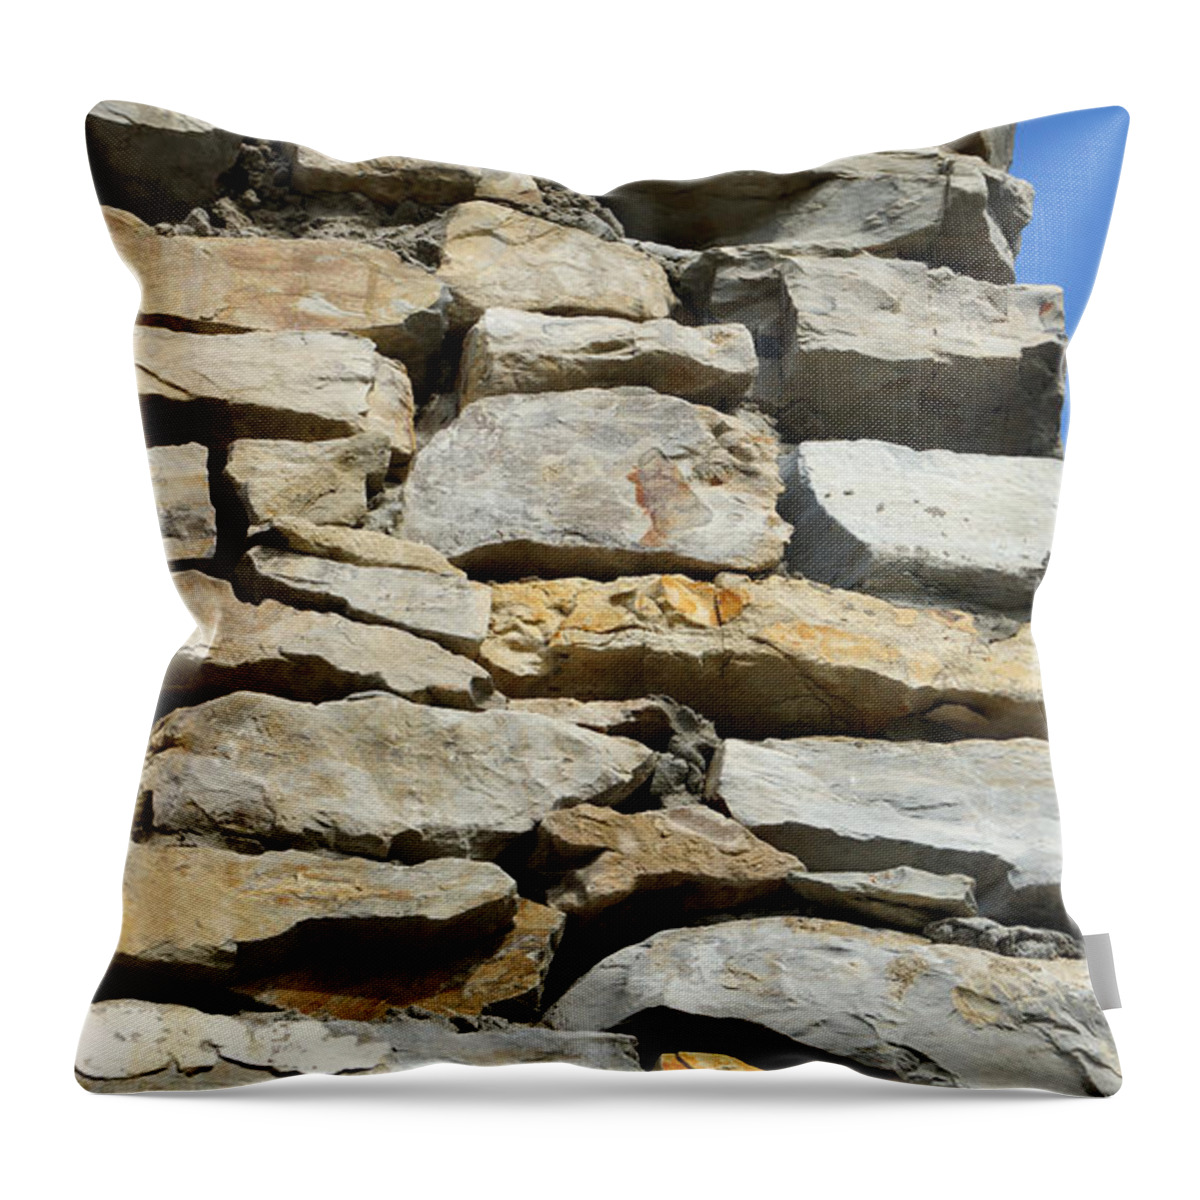 Stones Throw Pillow featuring the photograph Stones heavenward by Eva-Maria Di Bella